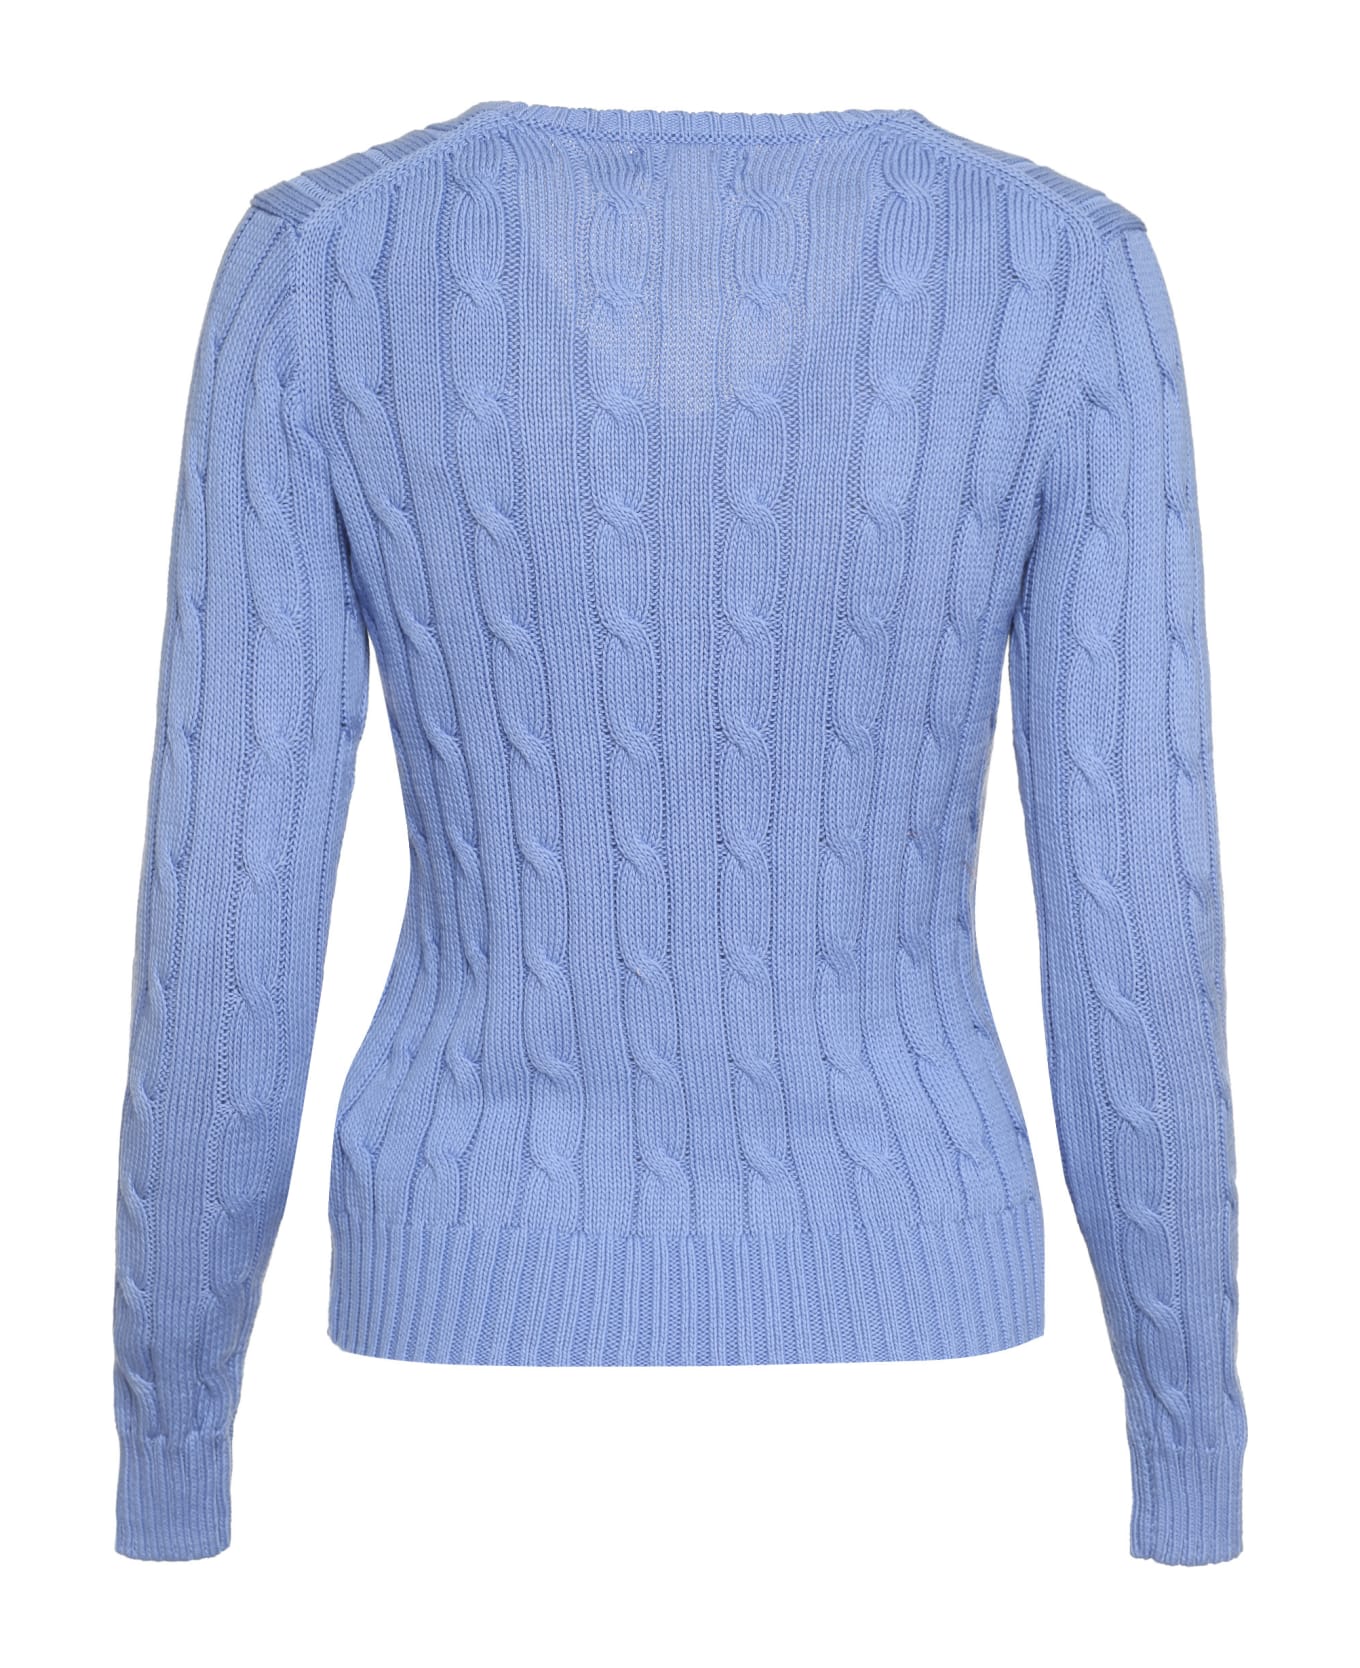 Ralph Lauren Cable Knit Sweater - Blue